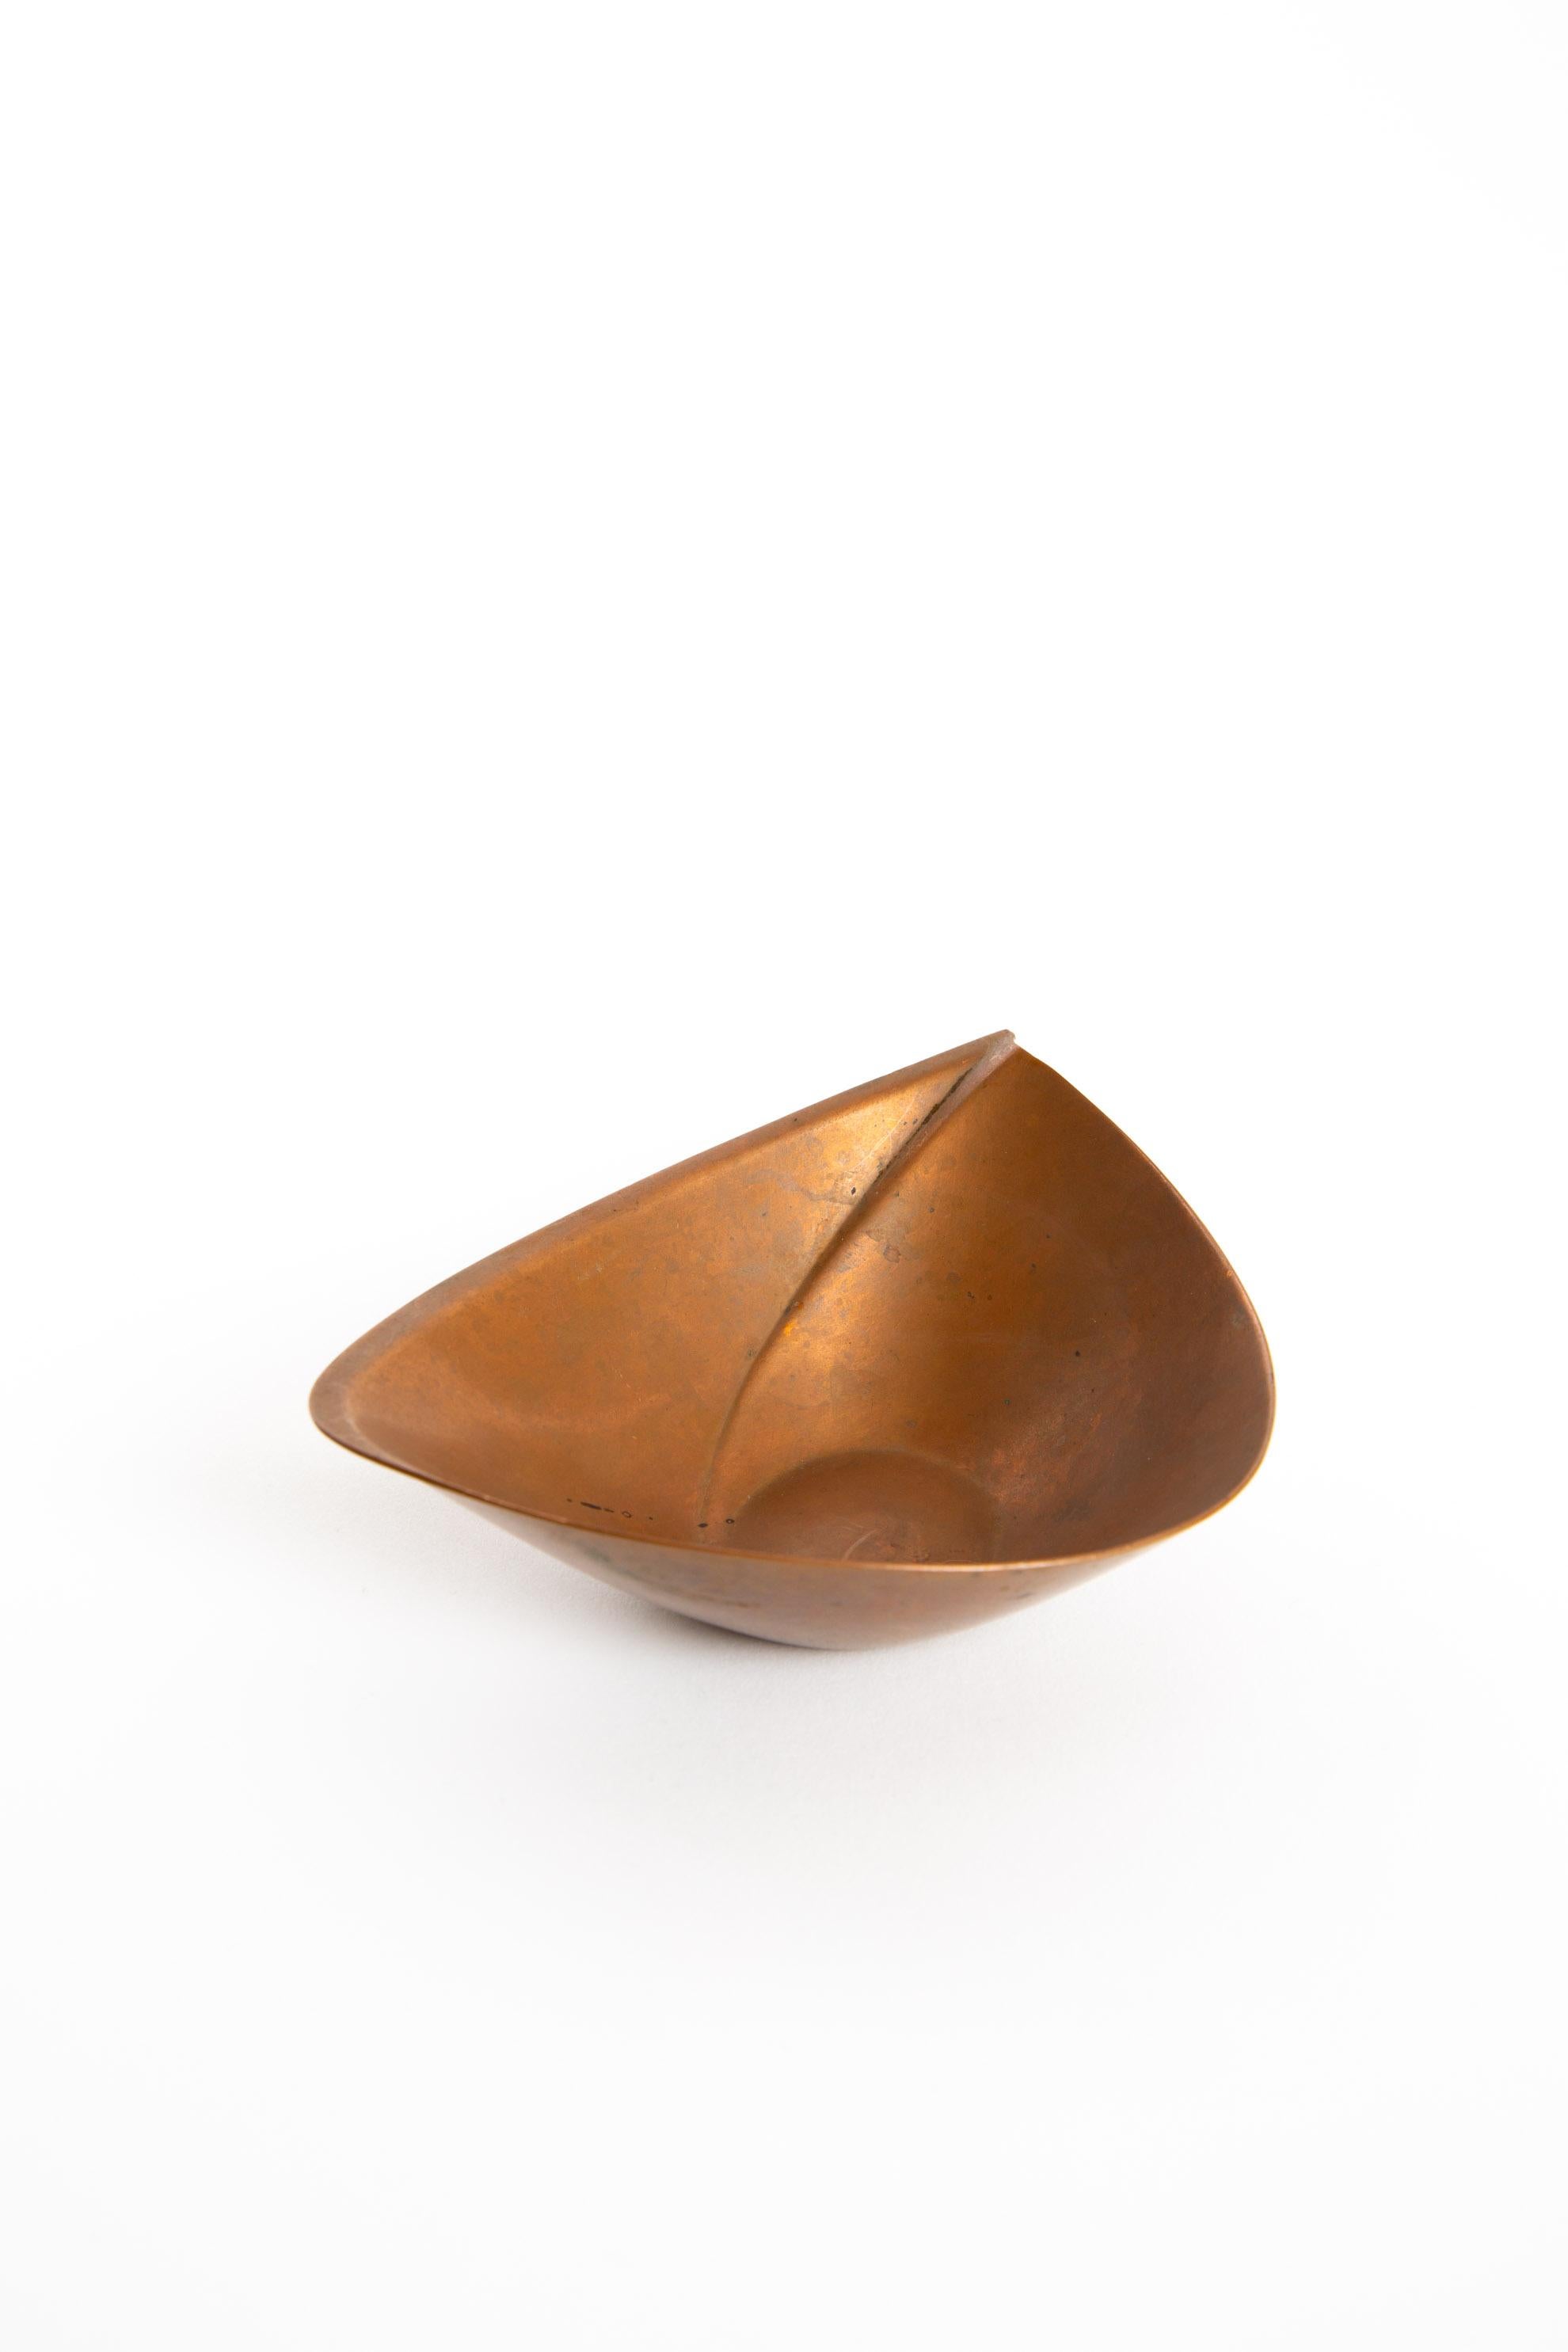 Finnish Tapio Wirkkala Bronze Bowl Organic Form by Kultakeskus Oy Finland For Sale